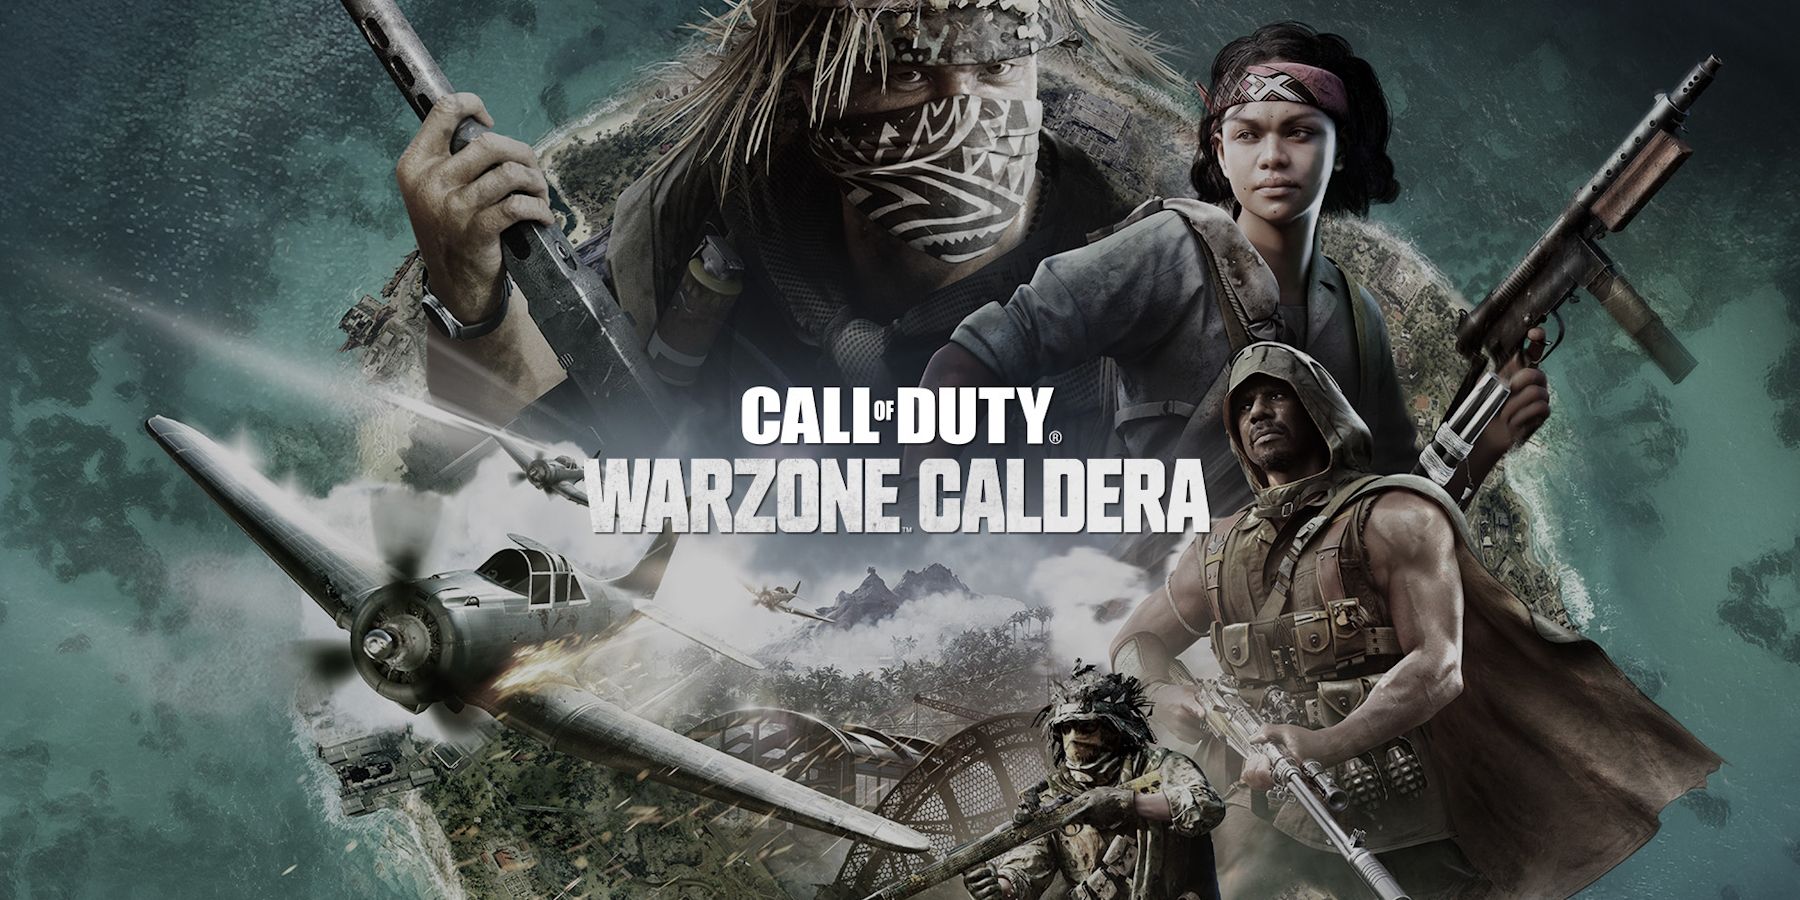 Promo art for Call of Duty: Warzone Caldera